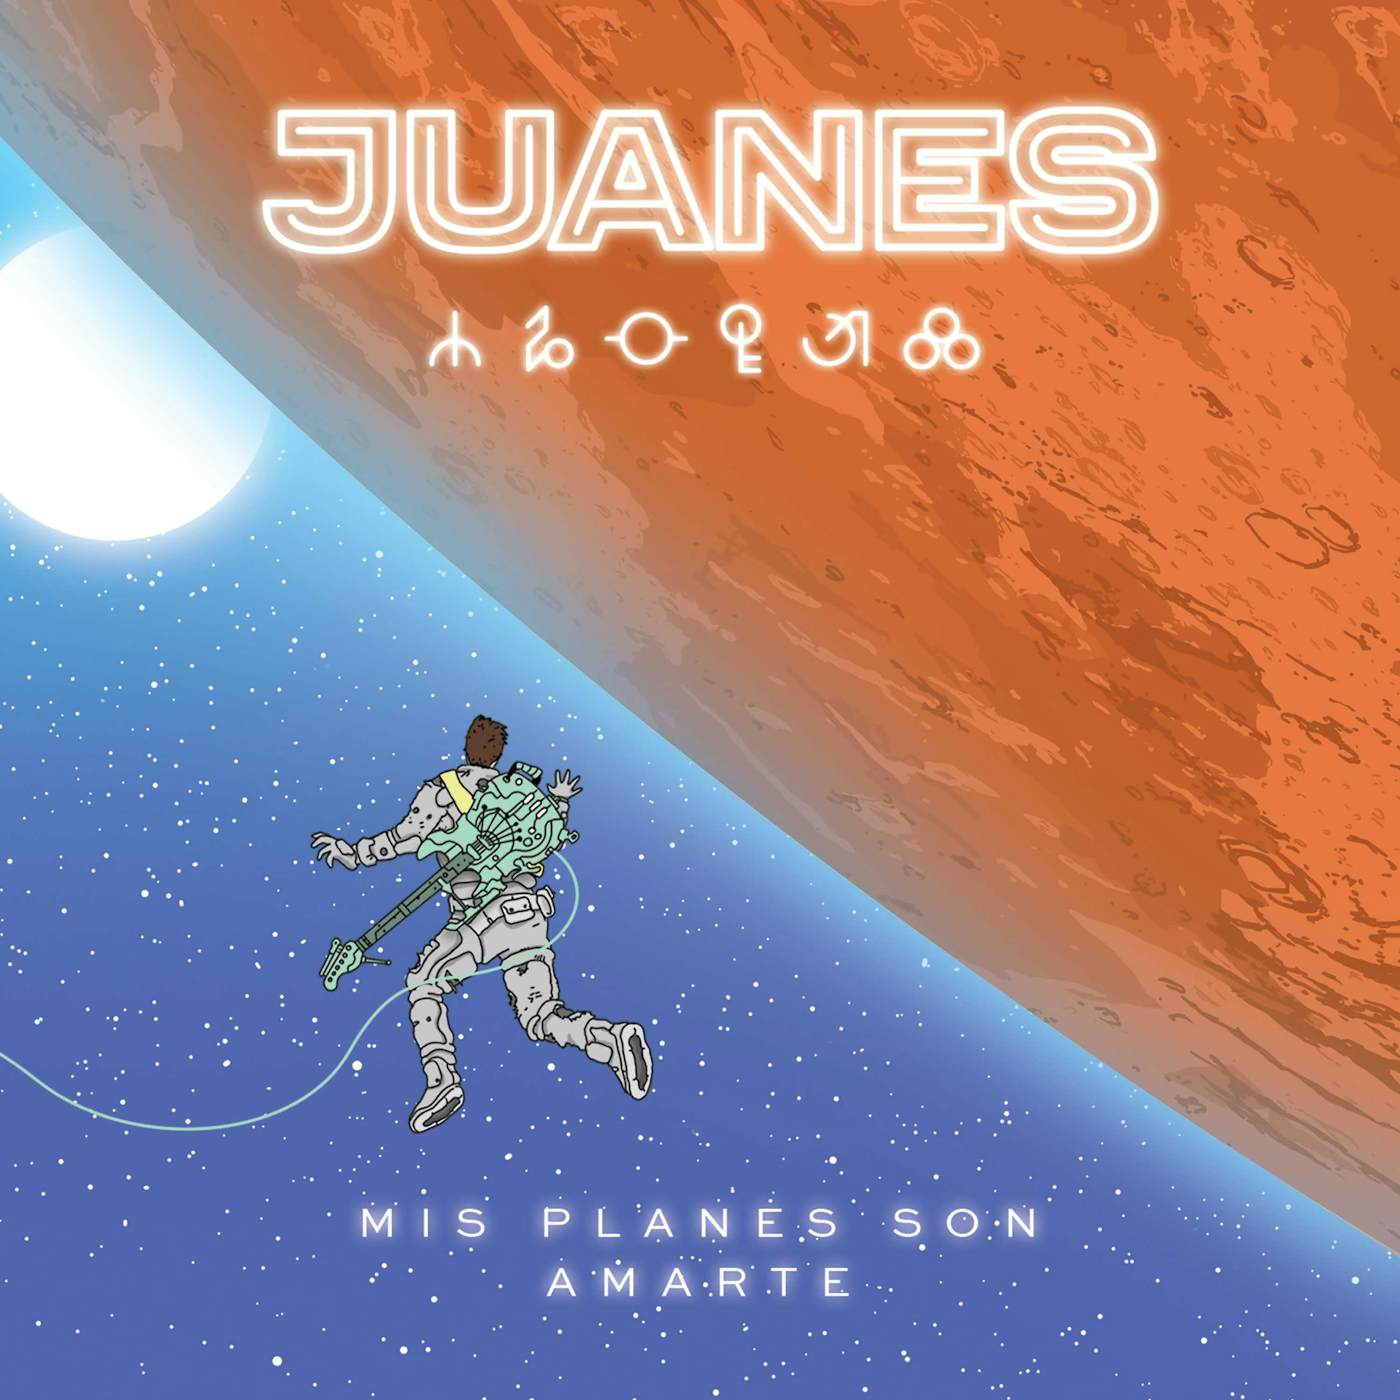 Juanes MIS PLANES SON AMARTE CD